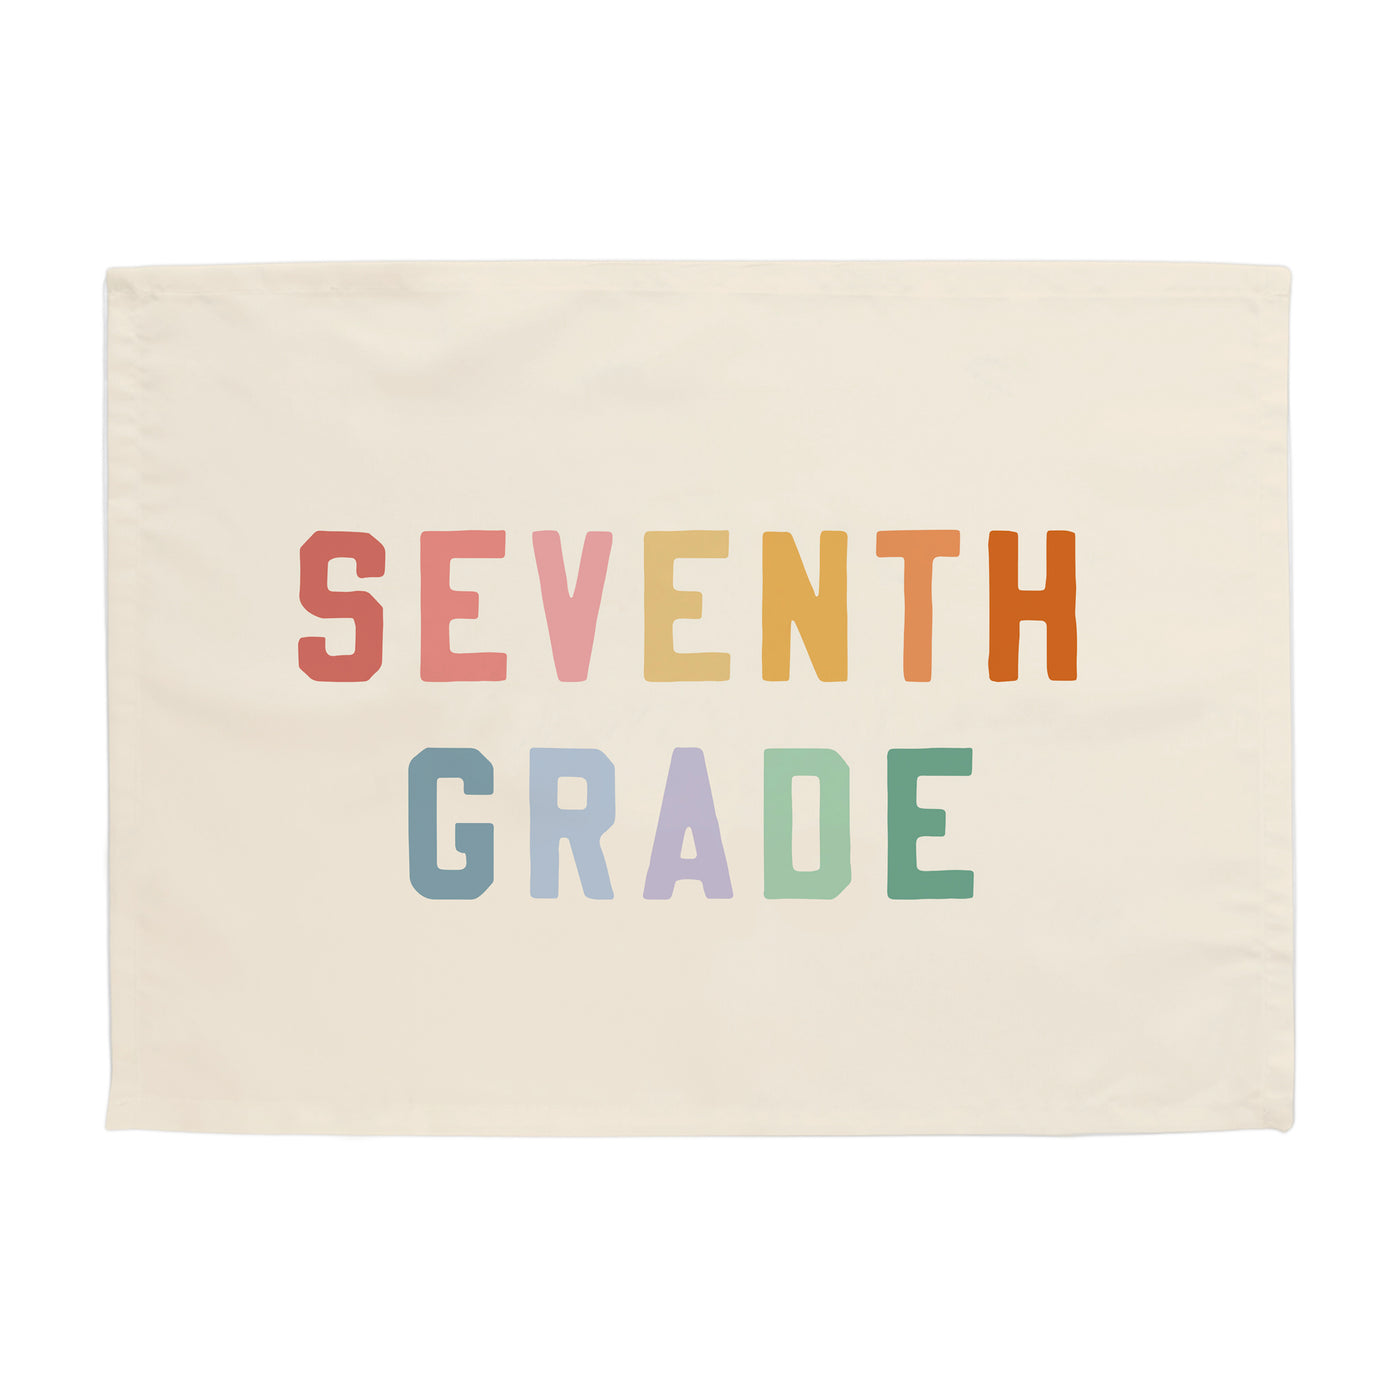 7th grade banner